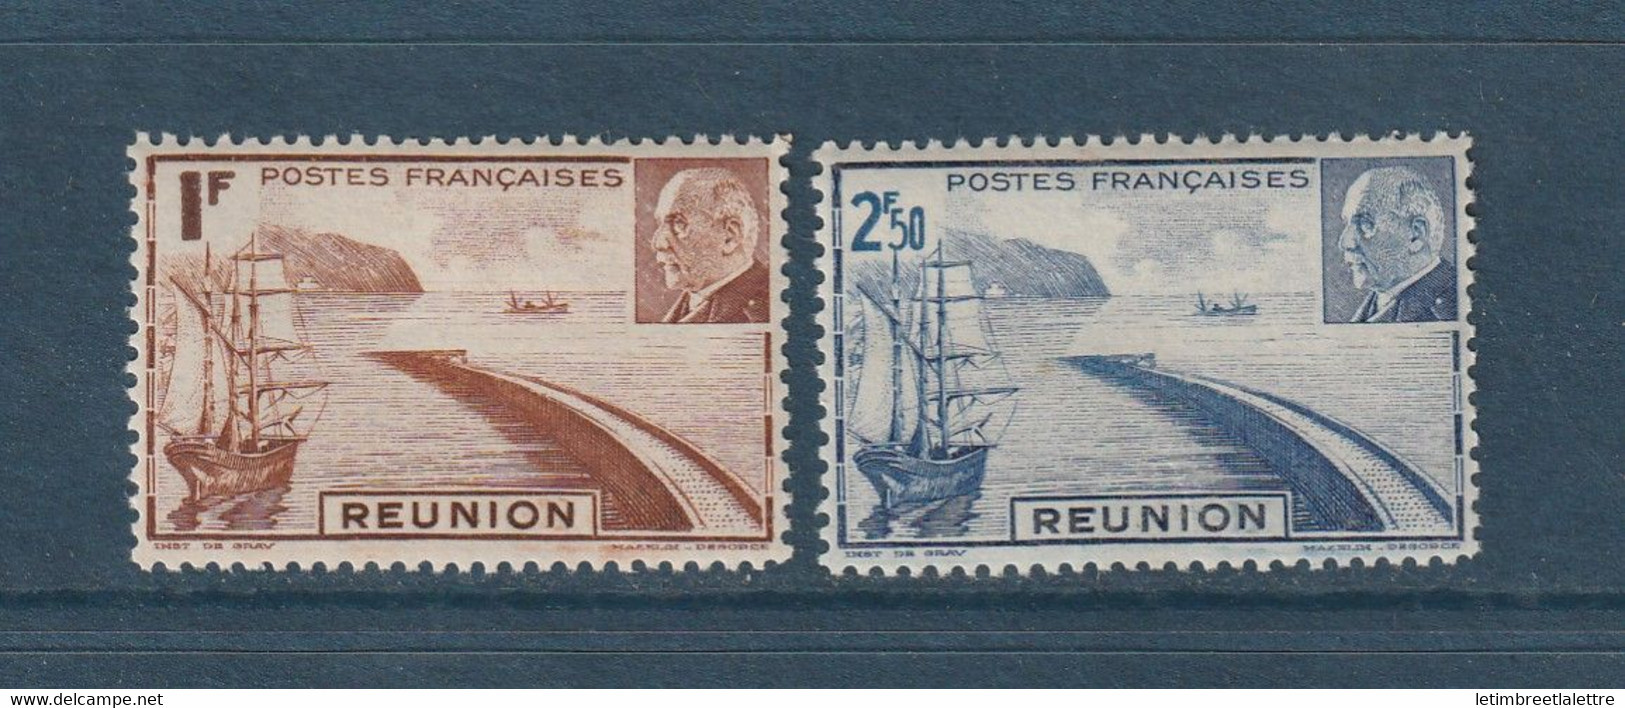 Réunion - YT N° 178 à 179 ** - Neuf Sans Charnière - 1941 - Ongebruikt